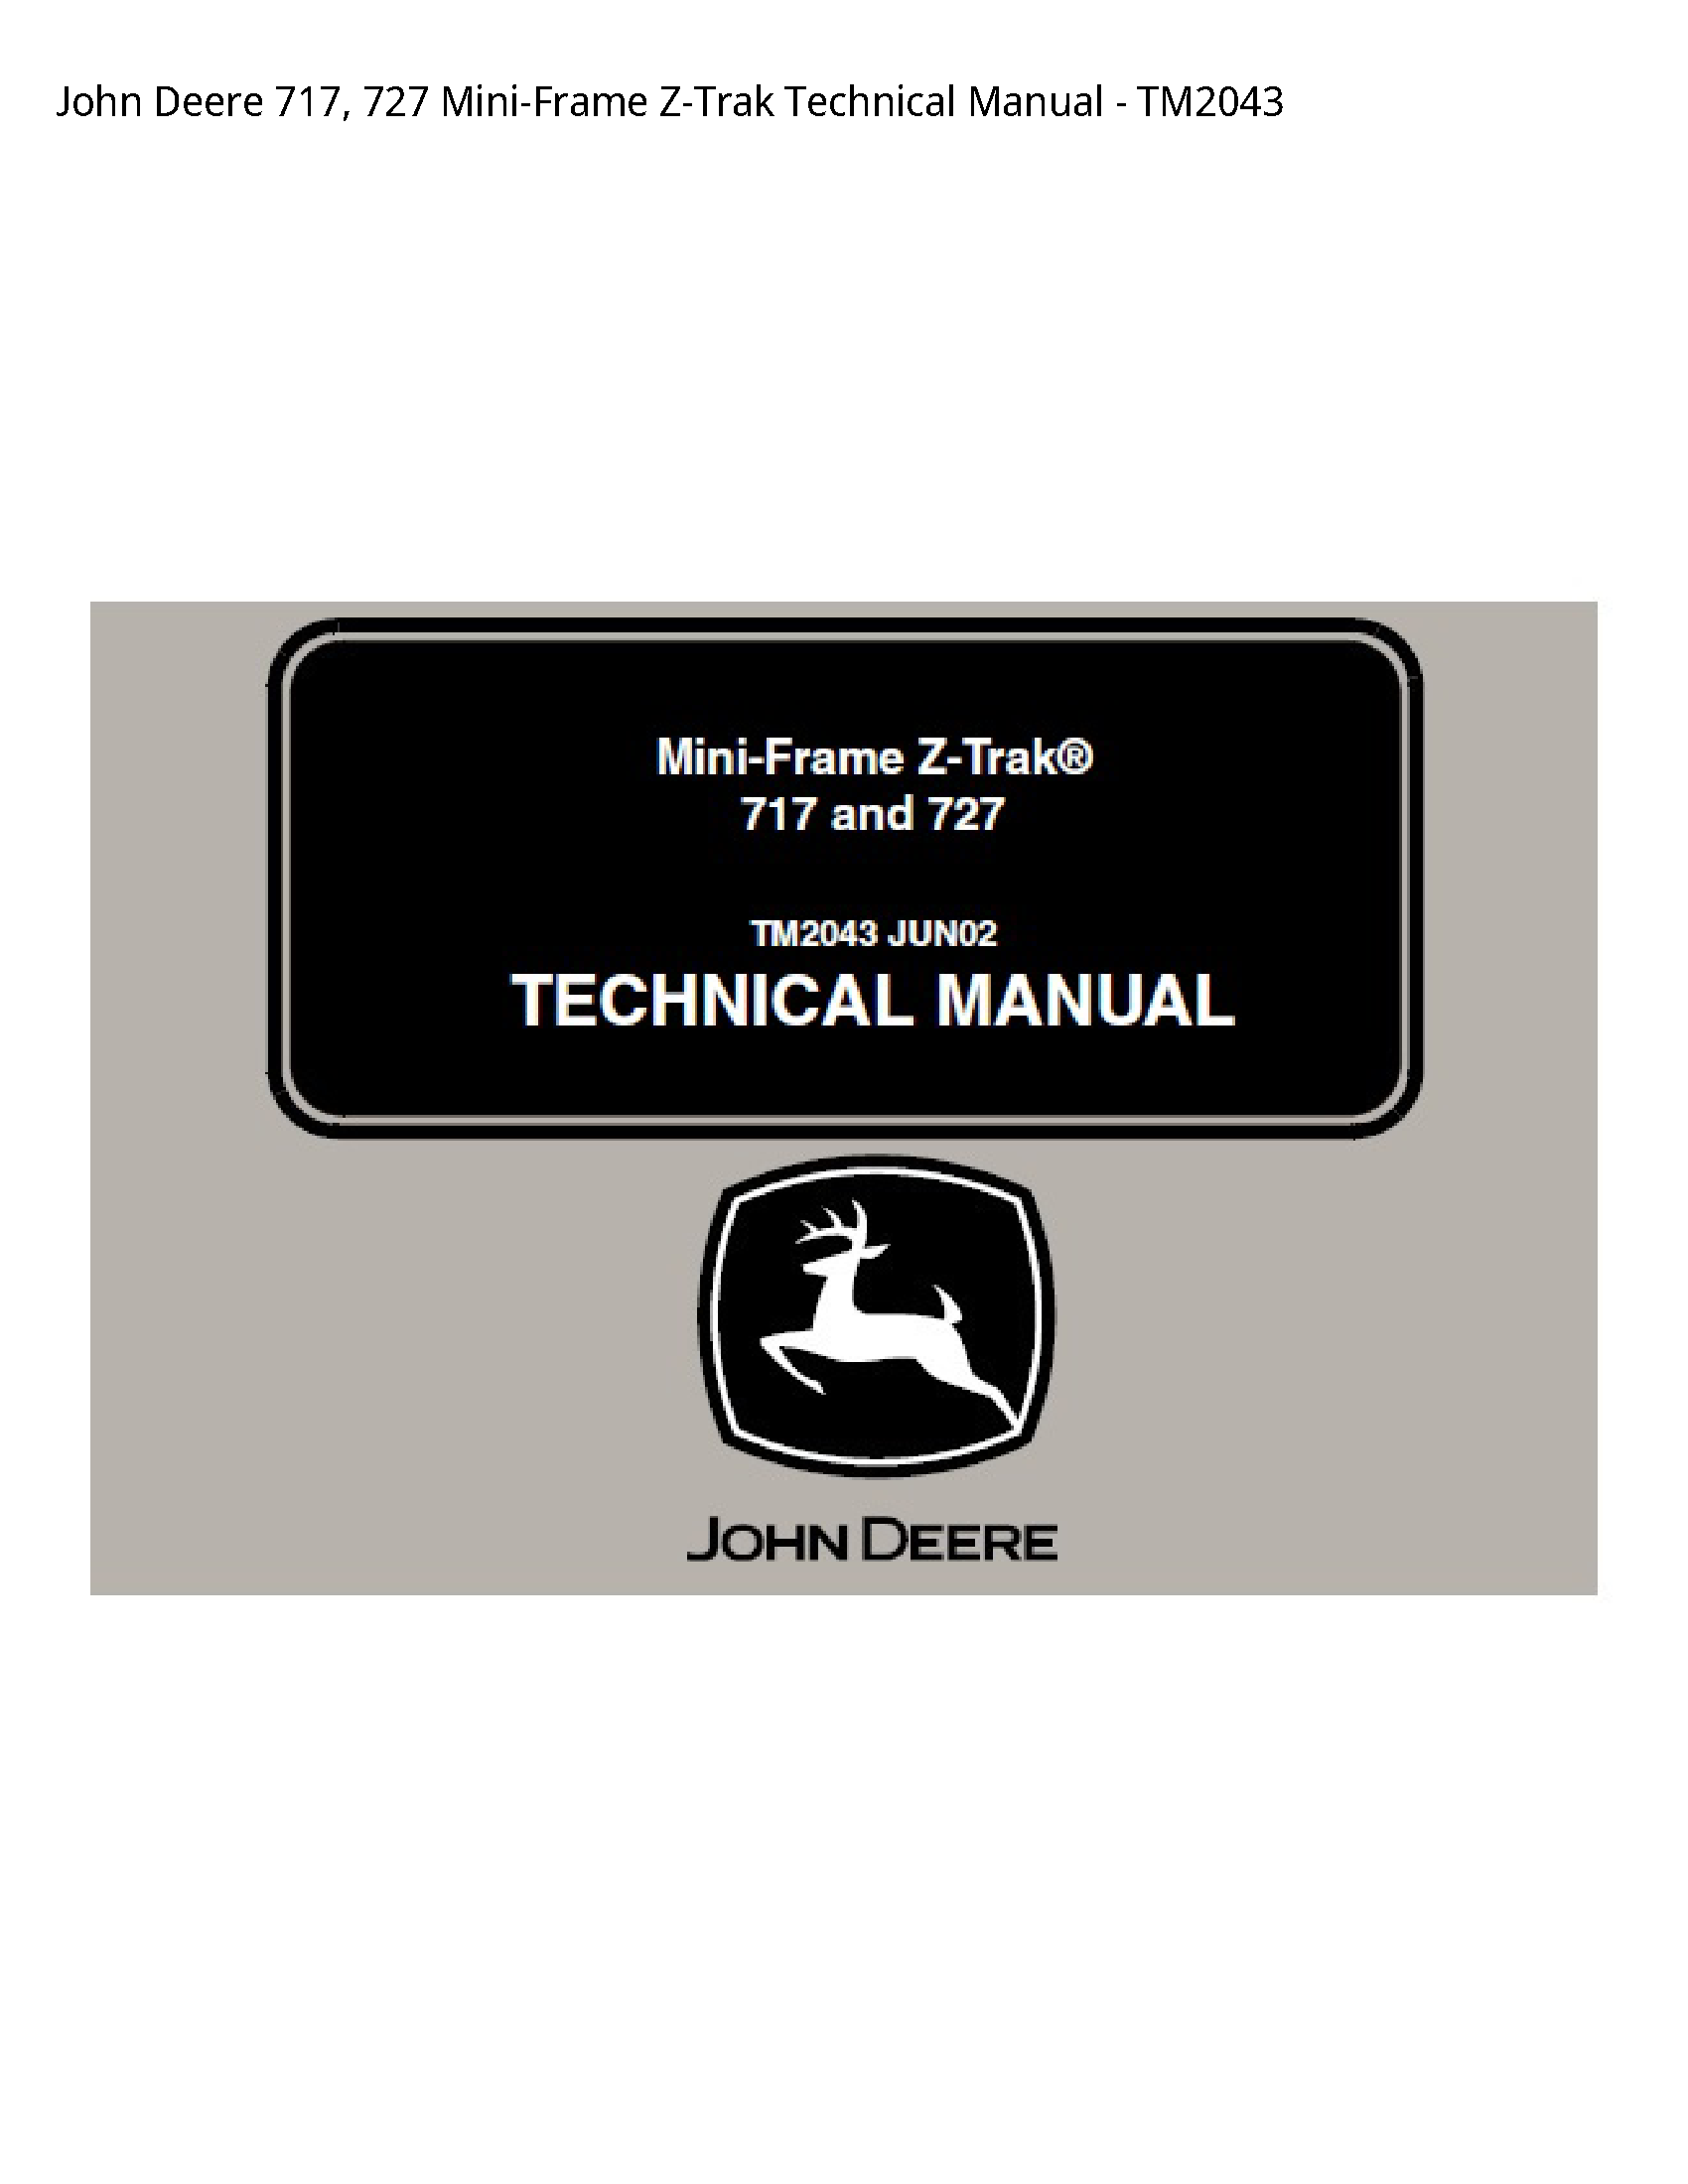 John Deere 717 Mini-Frame Z-Trak Technical manual